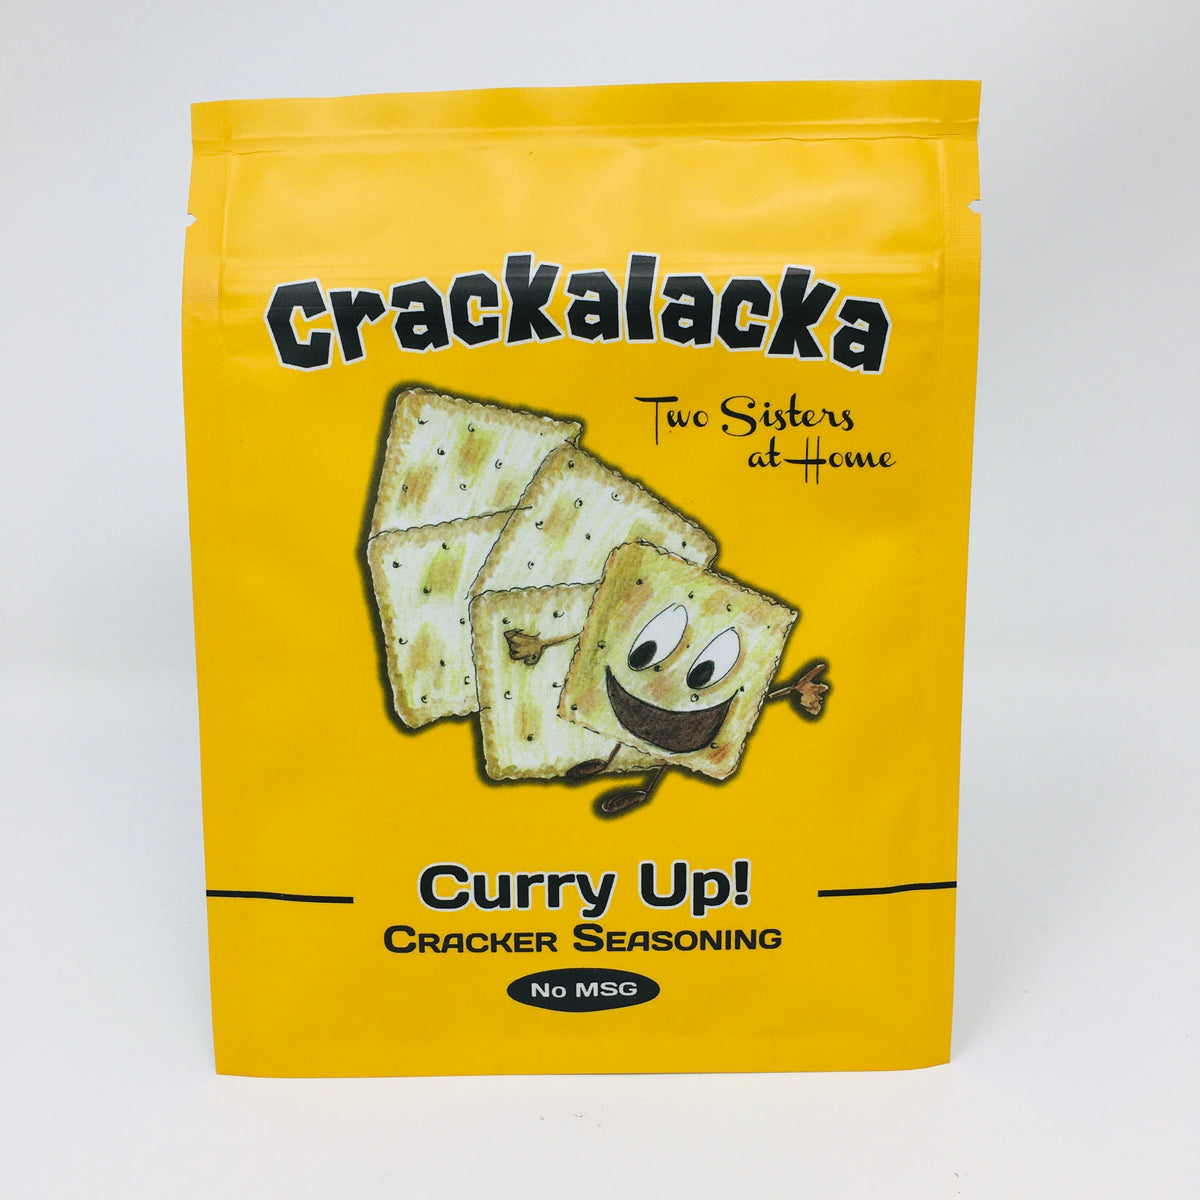 Crackalacka Curry Up Cracker Seasoning